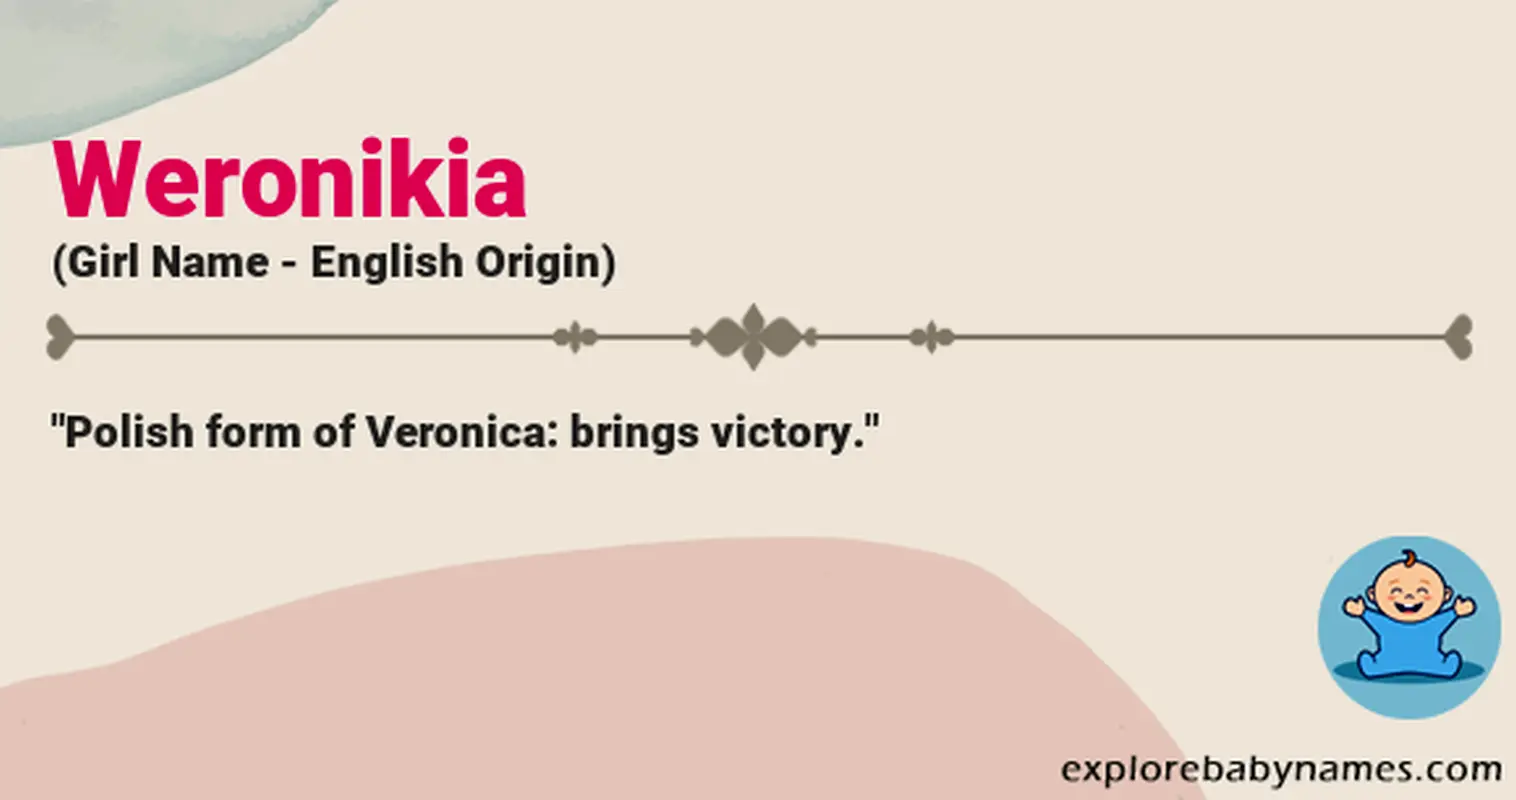 Meaning of Weronikia